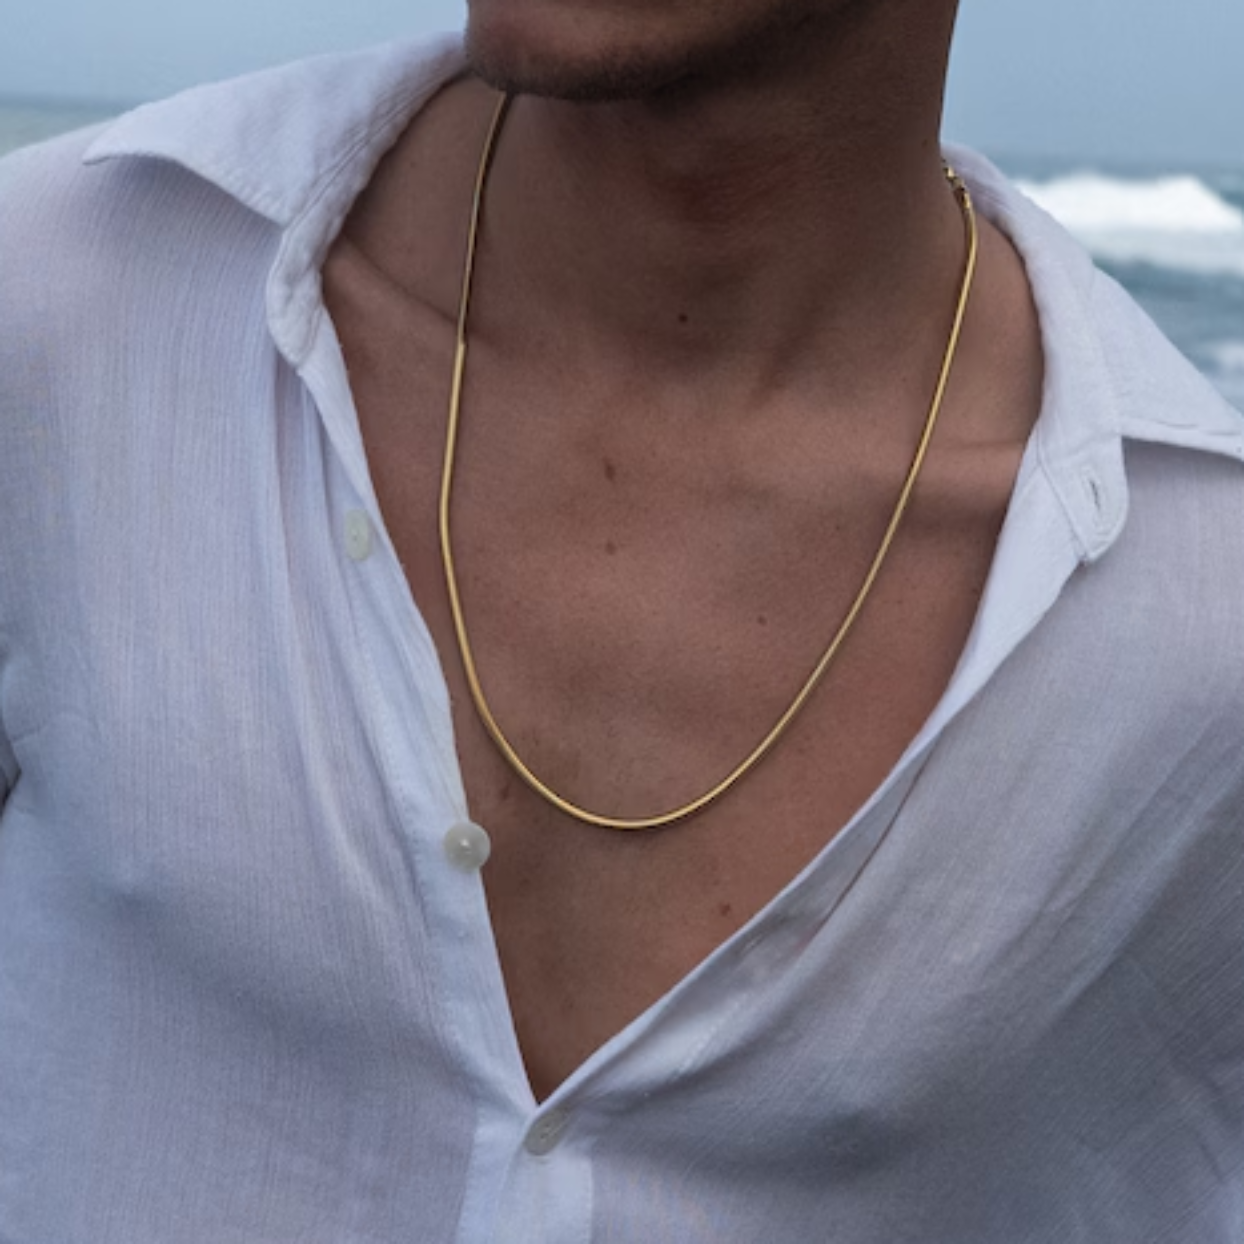 18k GOLD & SILVER 60cm SNAKE WATER PROOF NECKLACE - Premium necklaces from www.beachboho.com.au - Just $65! Shop now at www.beachboho.com.au